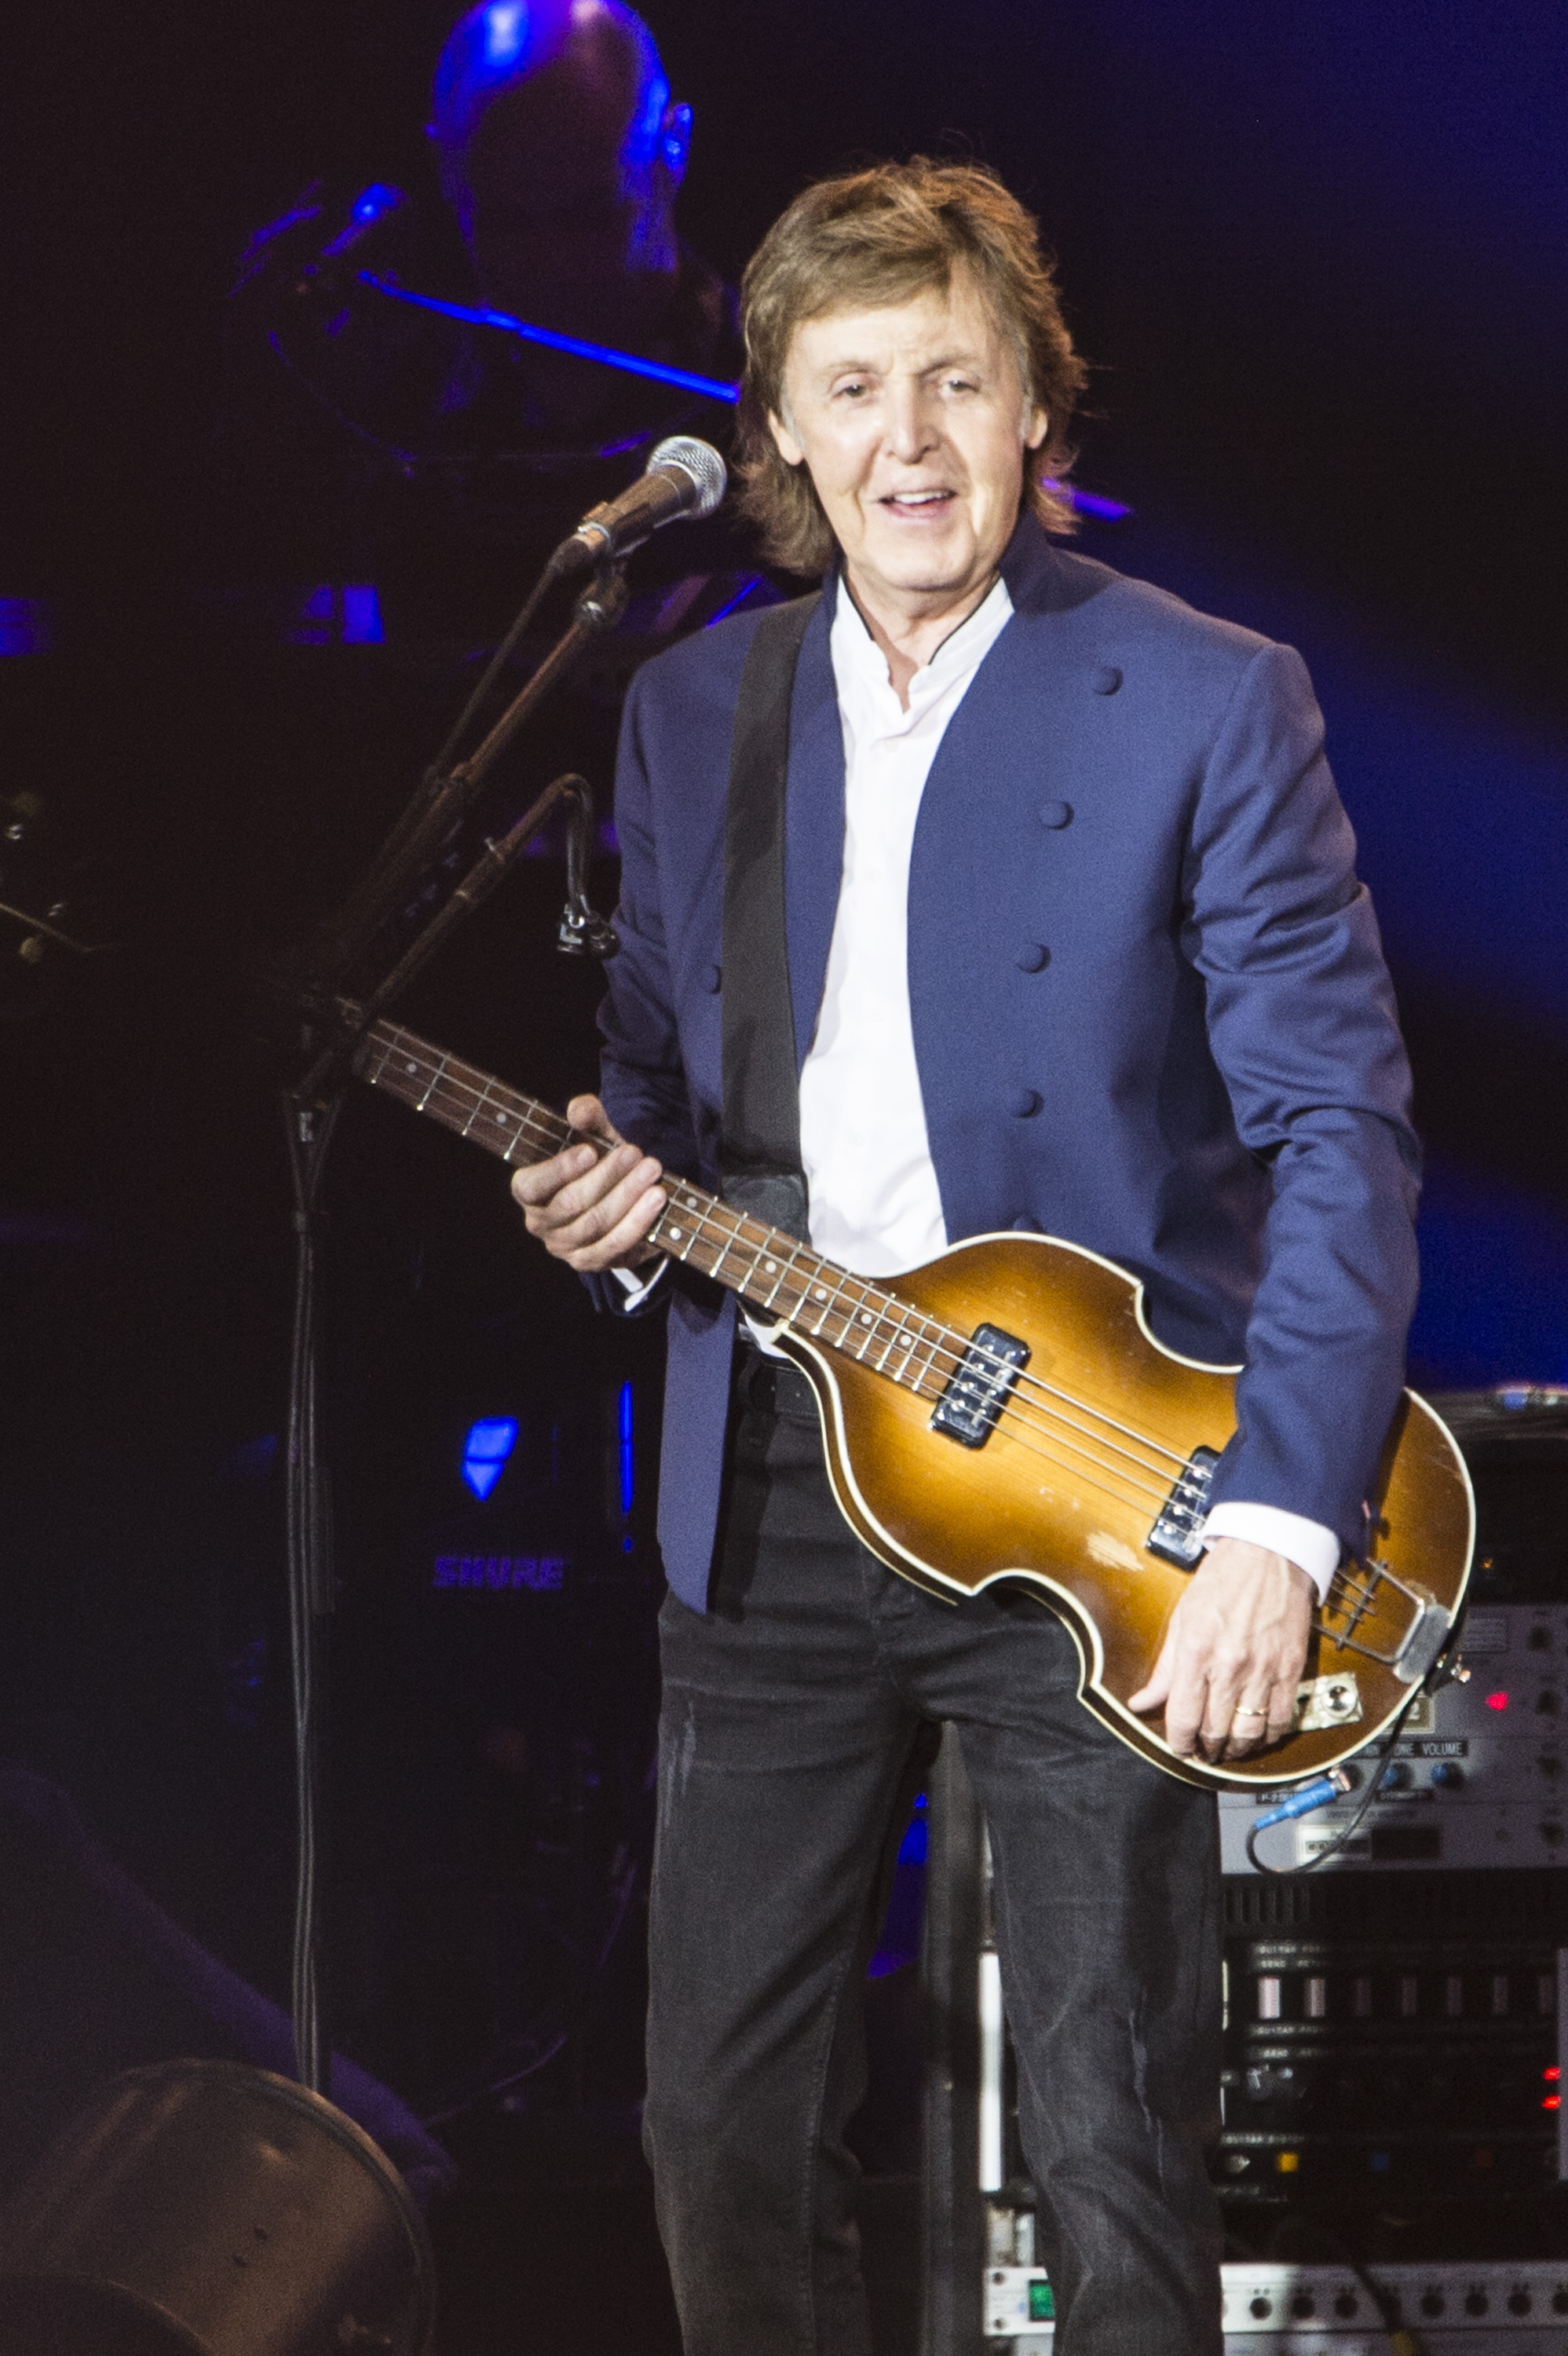 Paul McCartney performs at Roskilde Festival  on July 4, 2015 in Roskilde, Denmark. (Yuliya Christensen&mdash;Redferns/Getty Images)